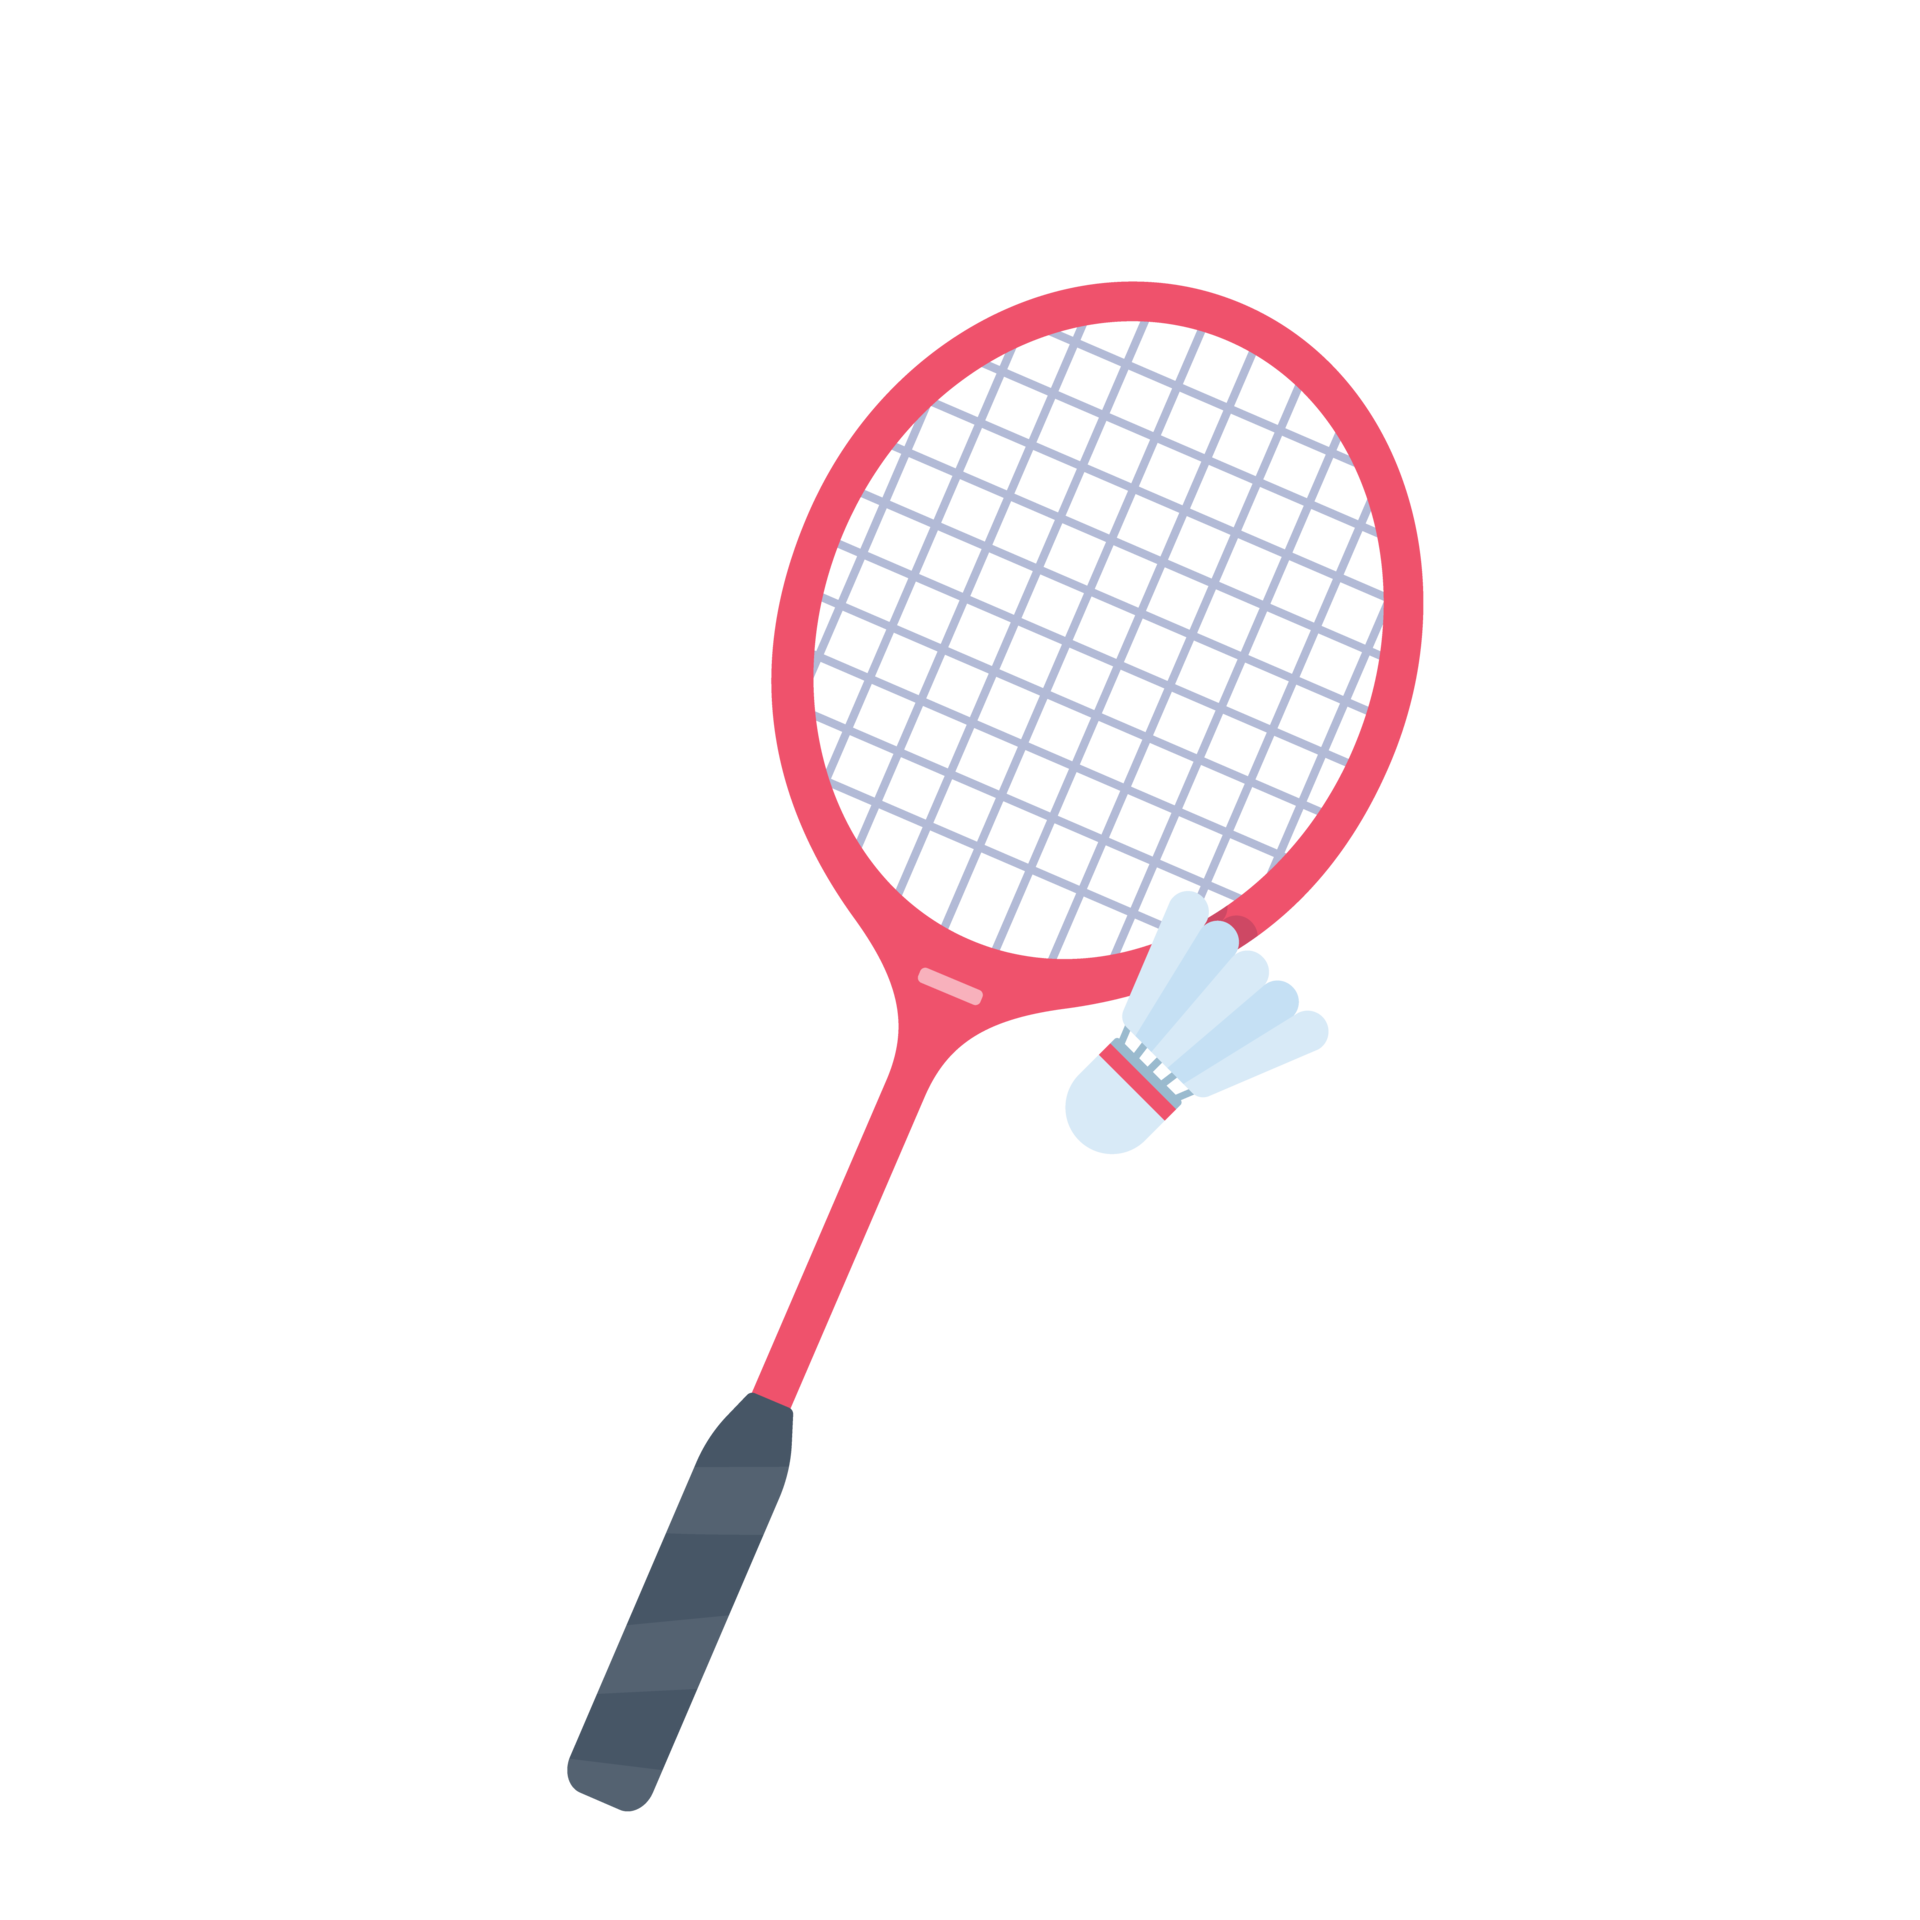 Badminton bat for hitting shuttlecocks in indoor sports 14488939 PNG